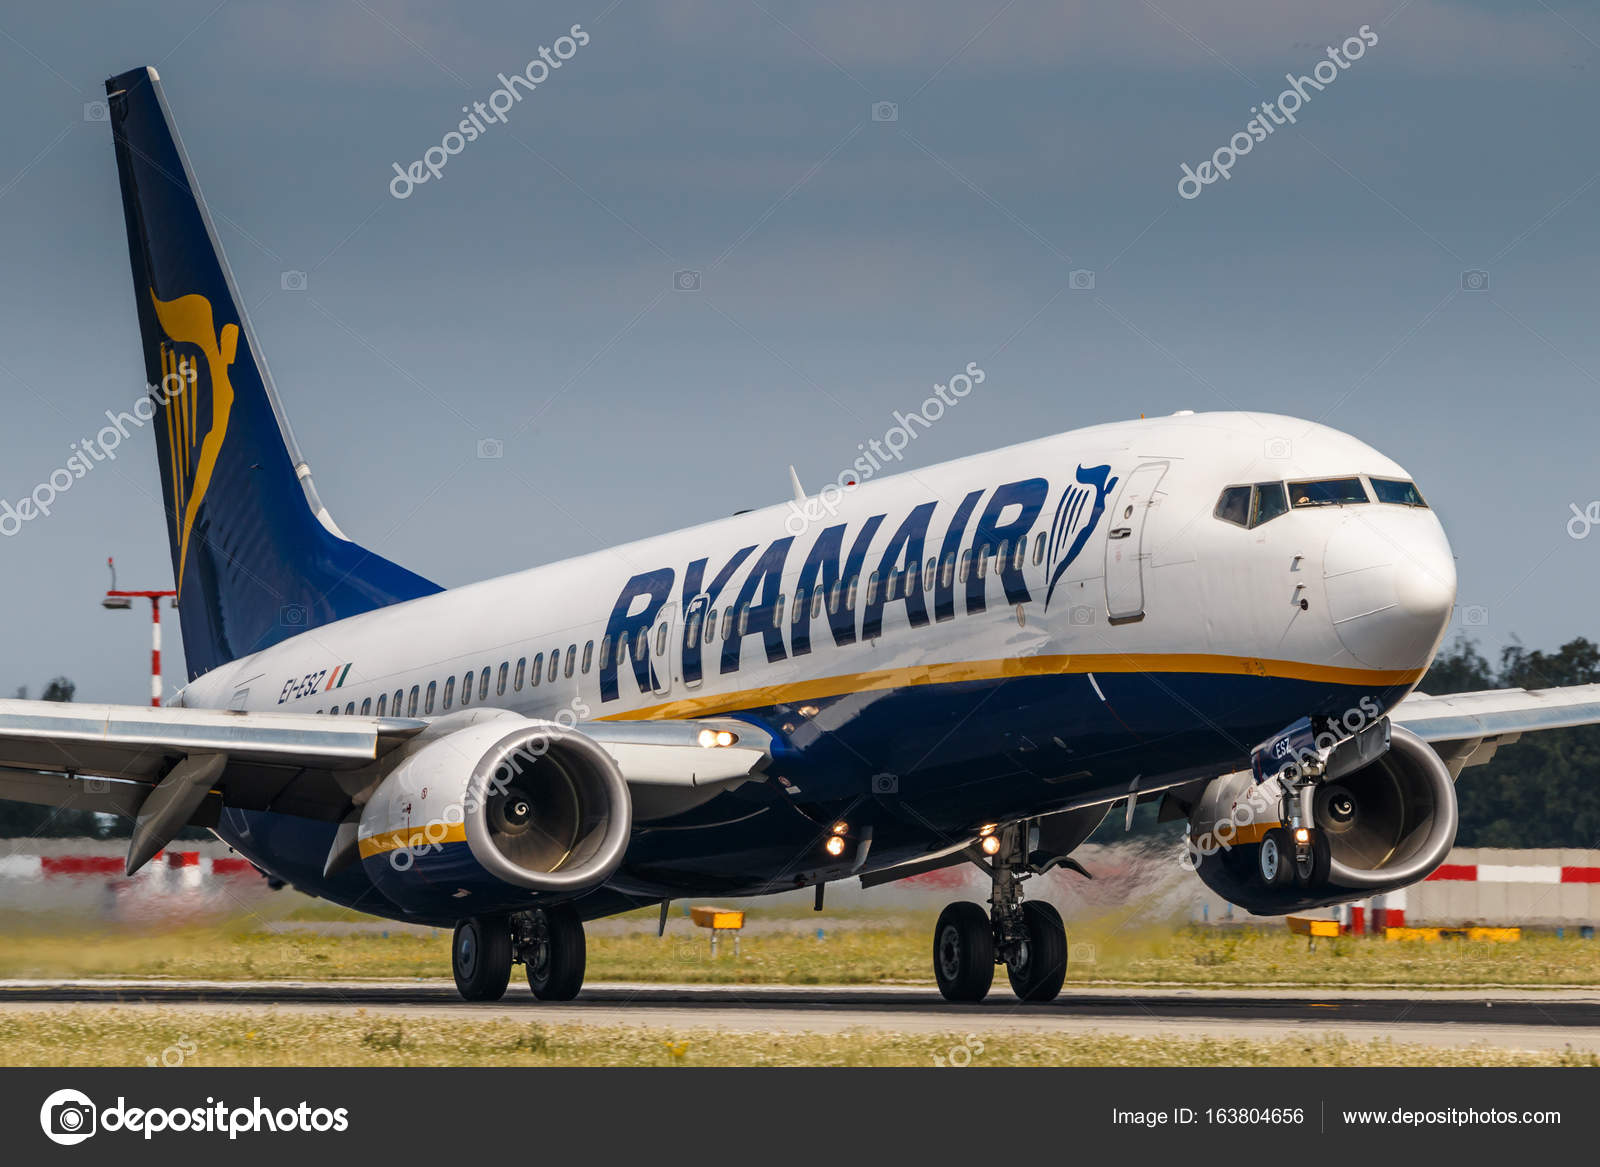 Boeing 737-800 of Ryanair – Stock Editorial Photo © rebius #1638046561600 x 1167